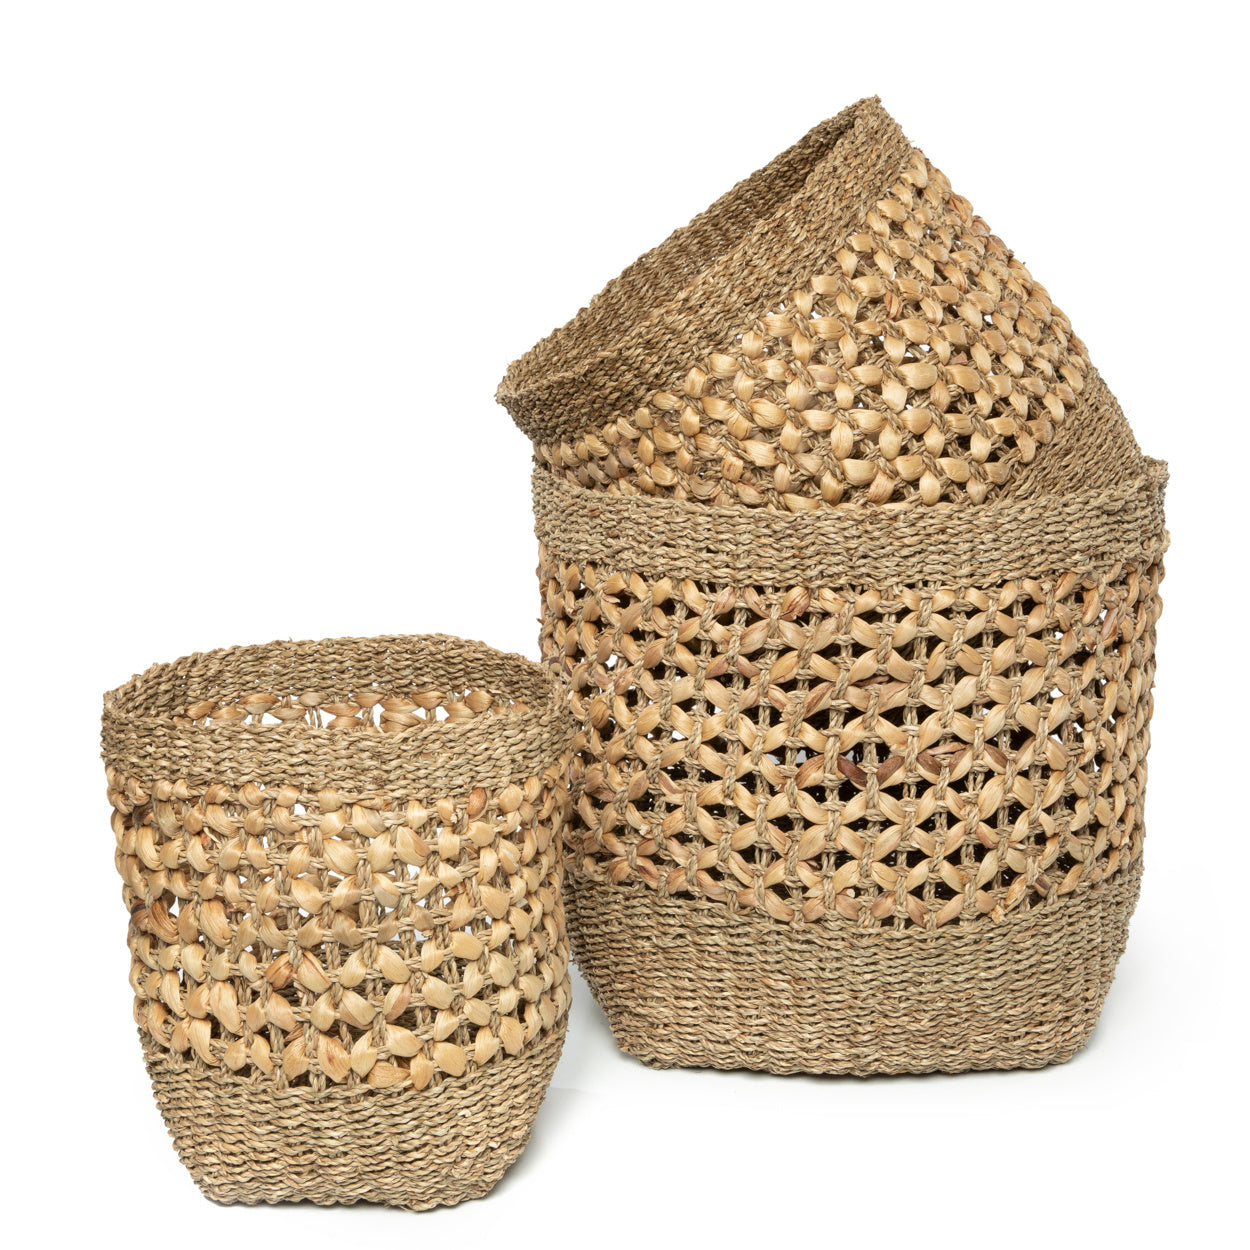 THE HALONG BAY Baskets Set of 3 folded half